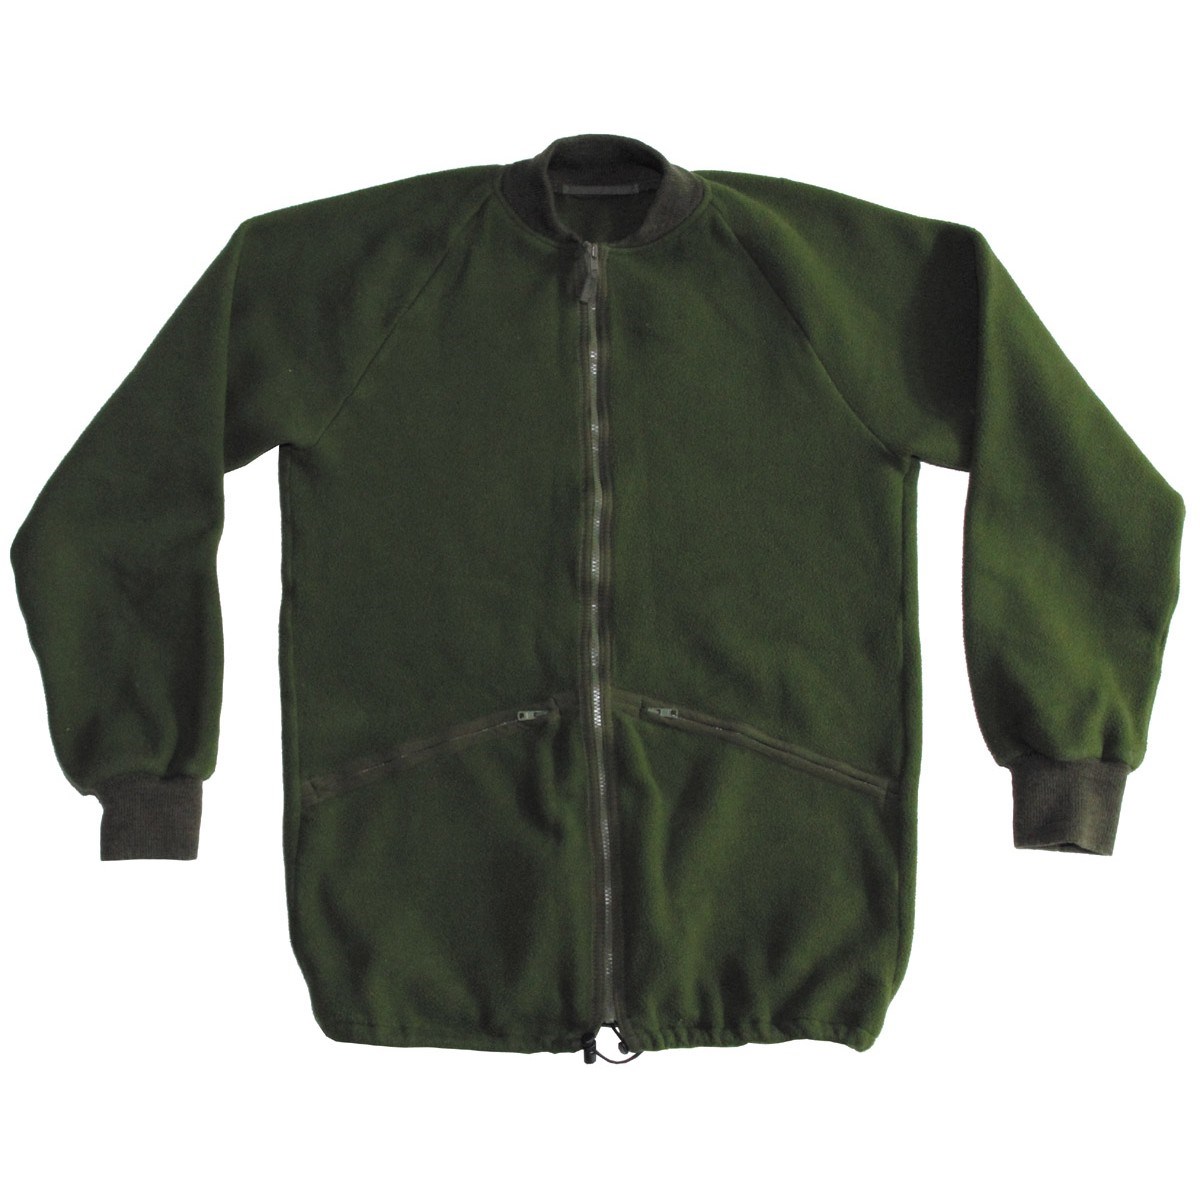 British fleece jacket OLIVE used British Army 91085500 L-11